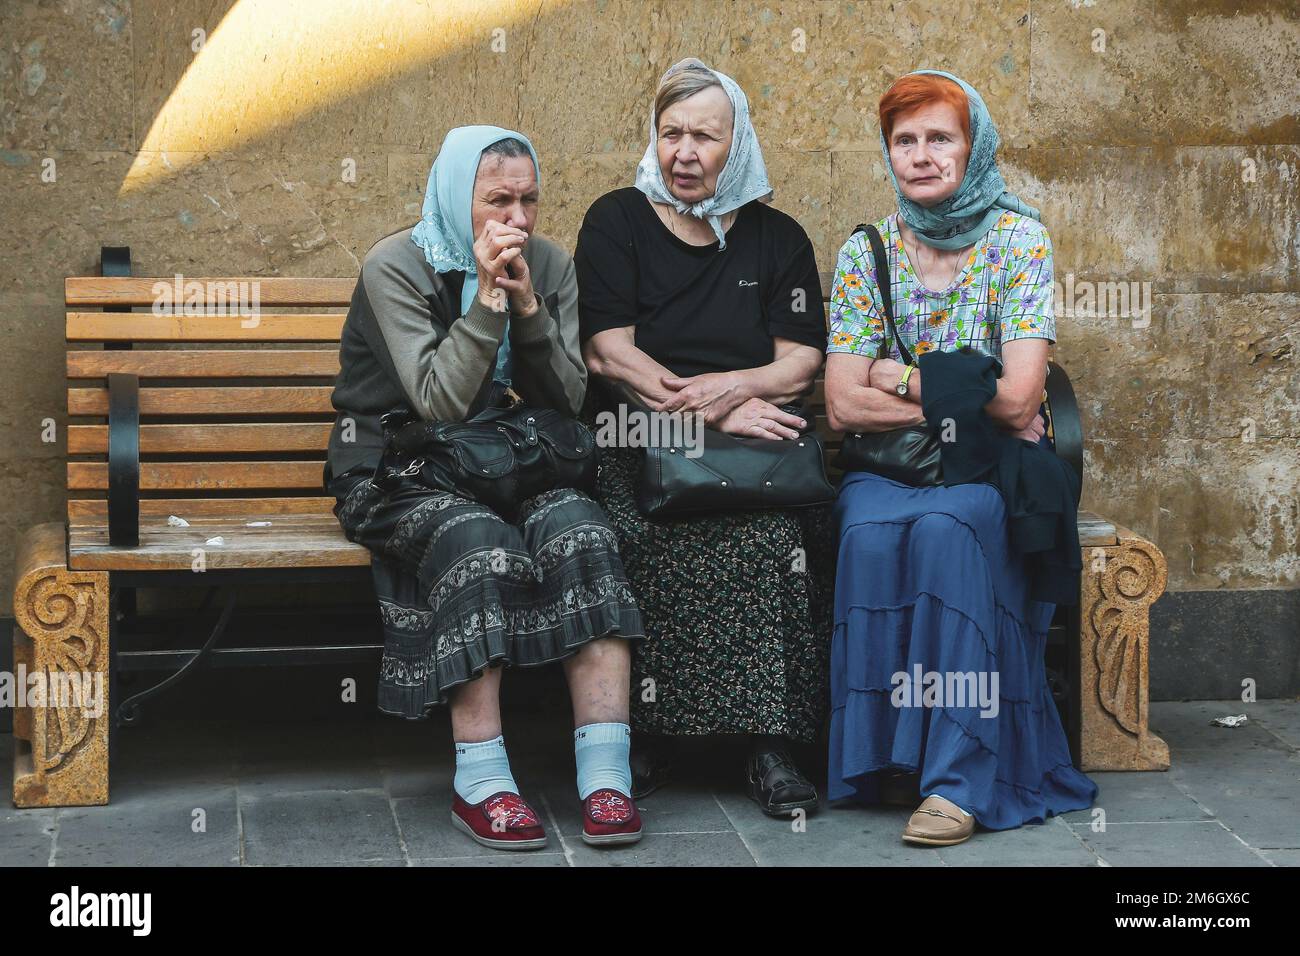 Faces of Turkey: Three Women on a Bench Stock Photo